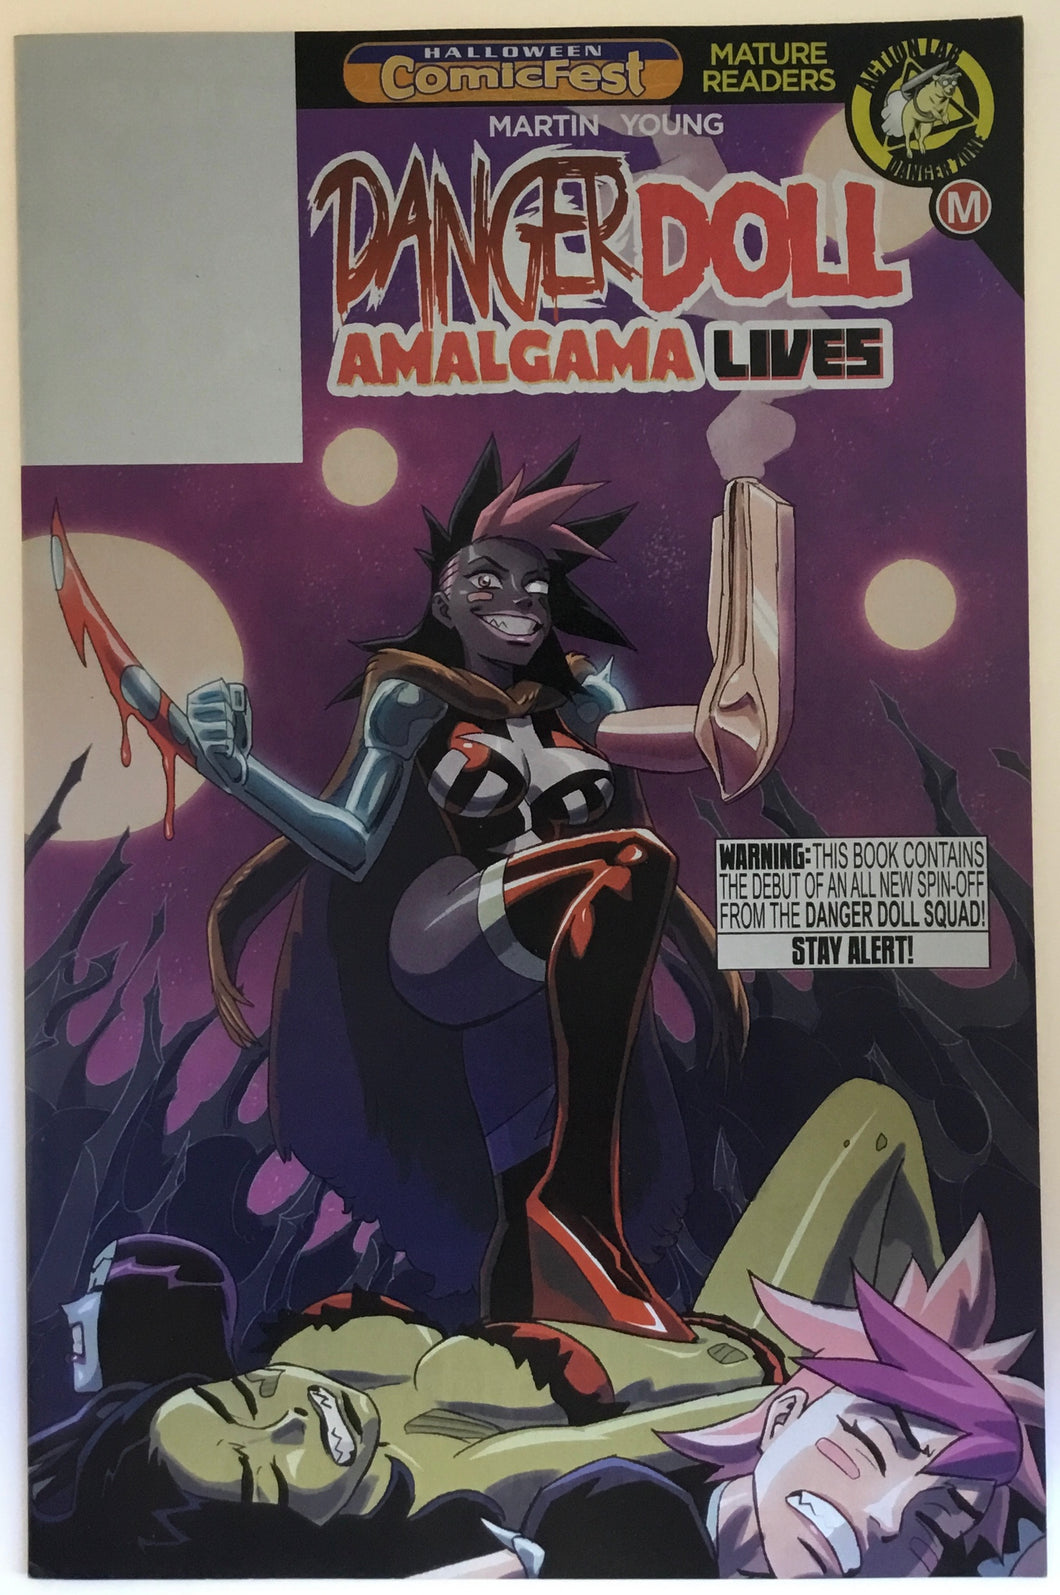 Danger Doll Amalgama Lives No. #1 2018 Action Lab Comics